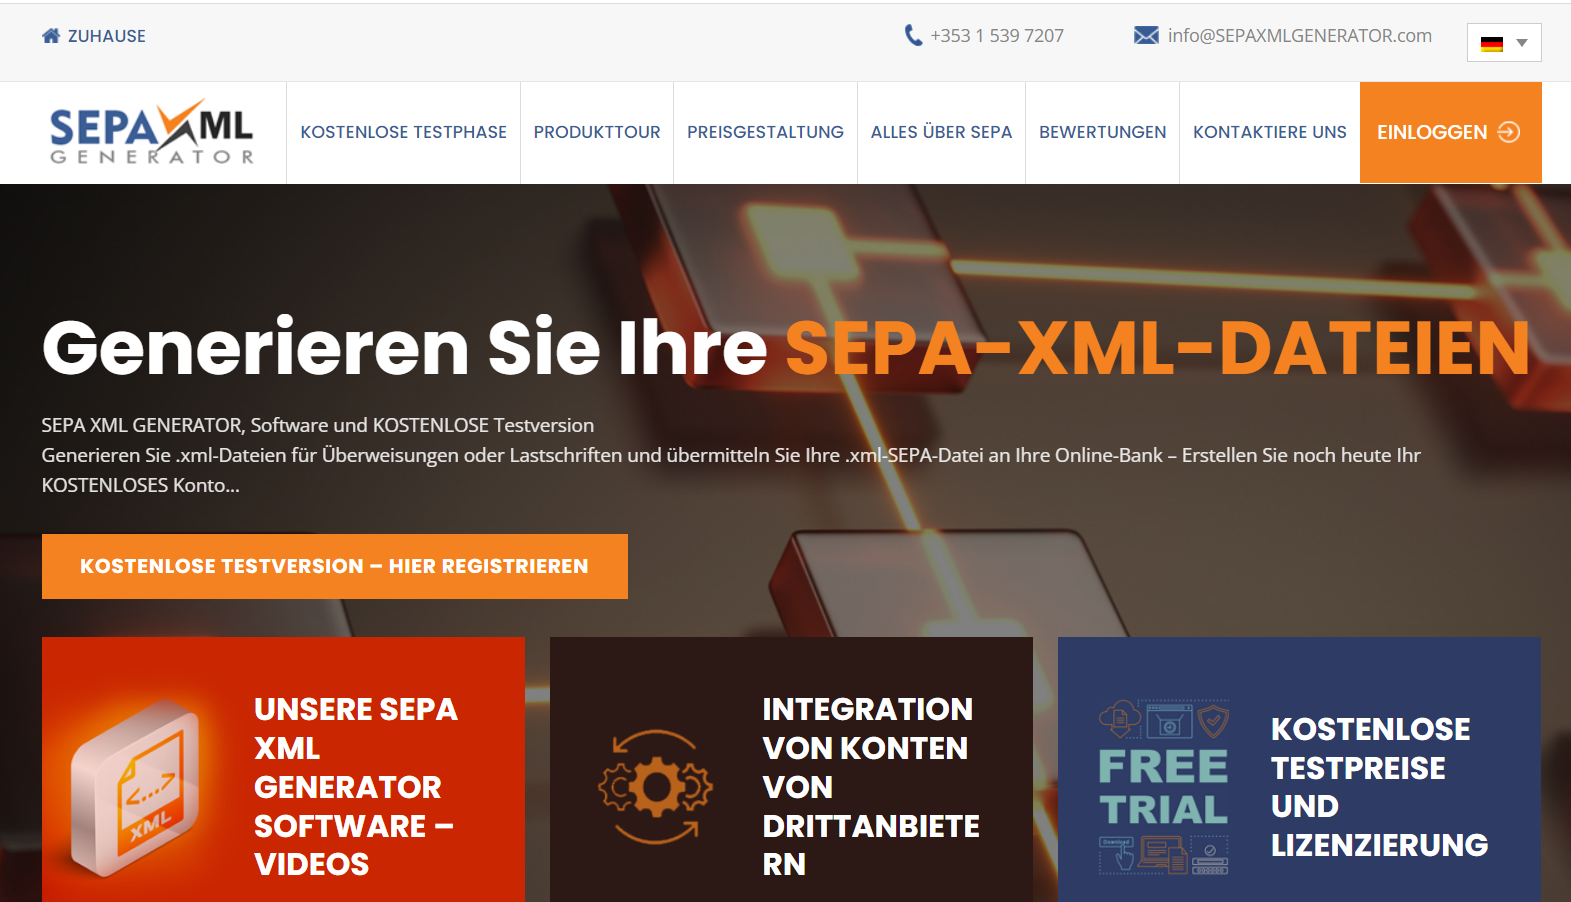 SEPA XML GENERATOR now in German